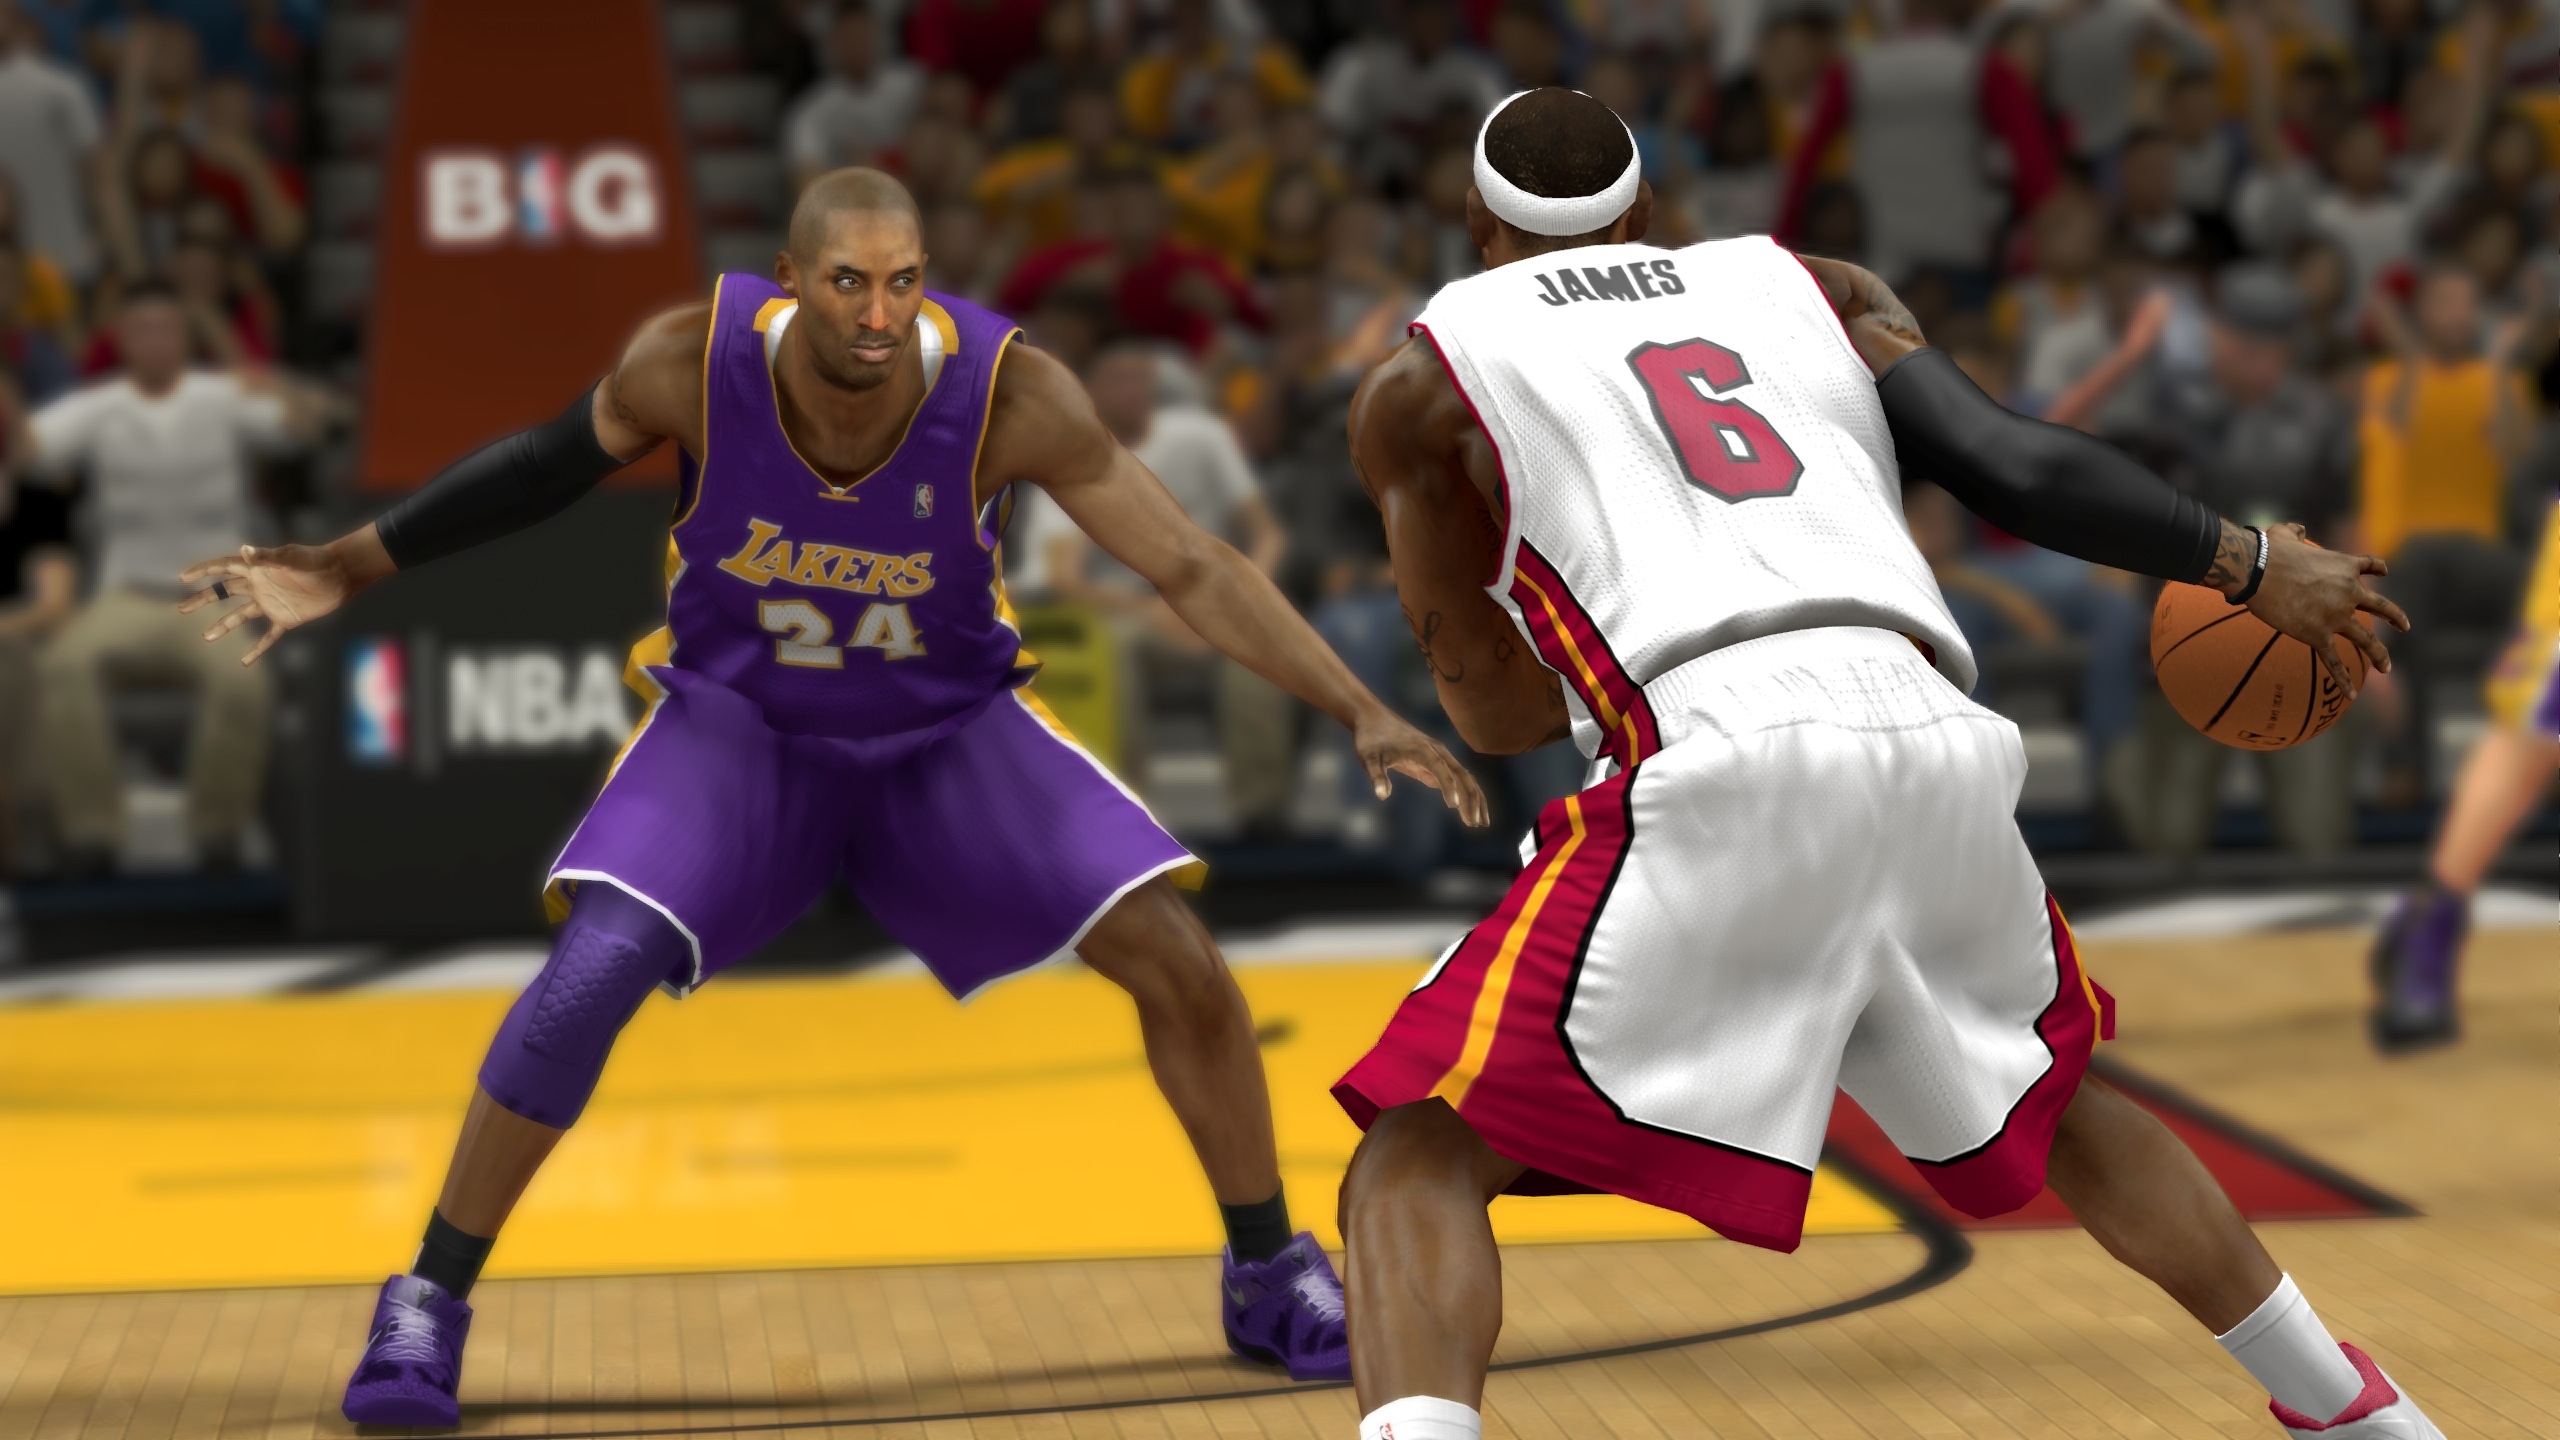 Jogo NBA 2K24 Bryant Edition para PS4